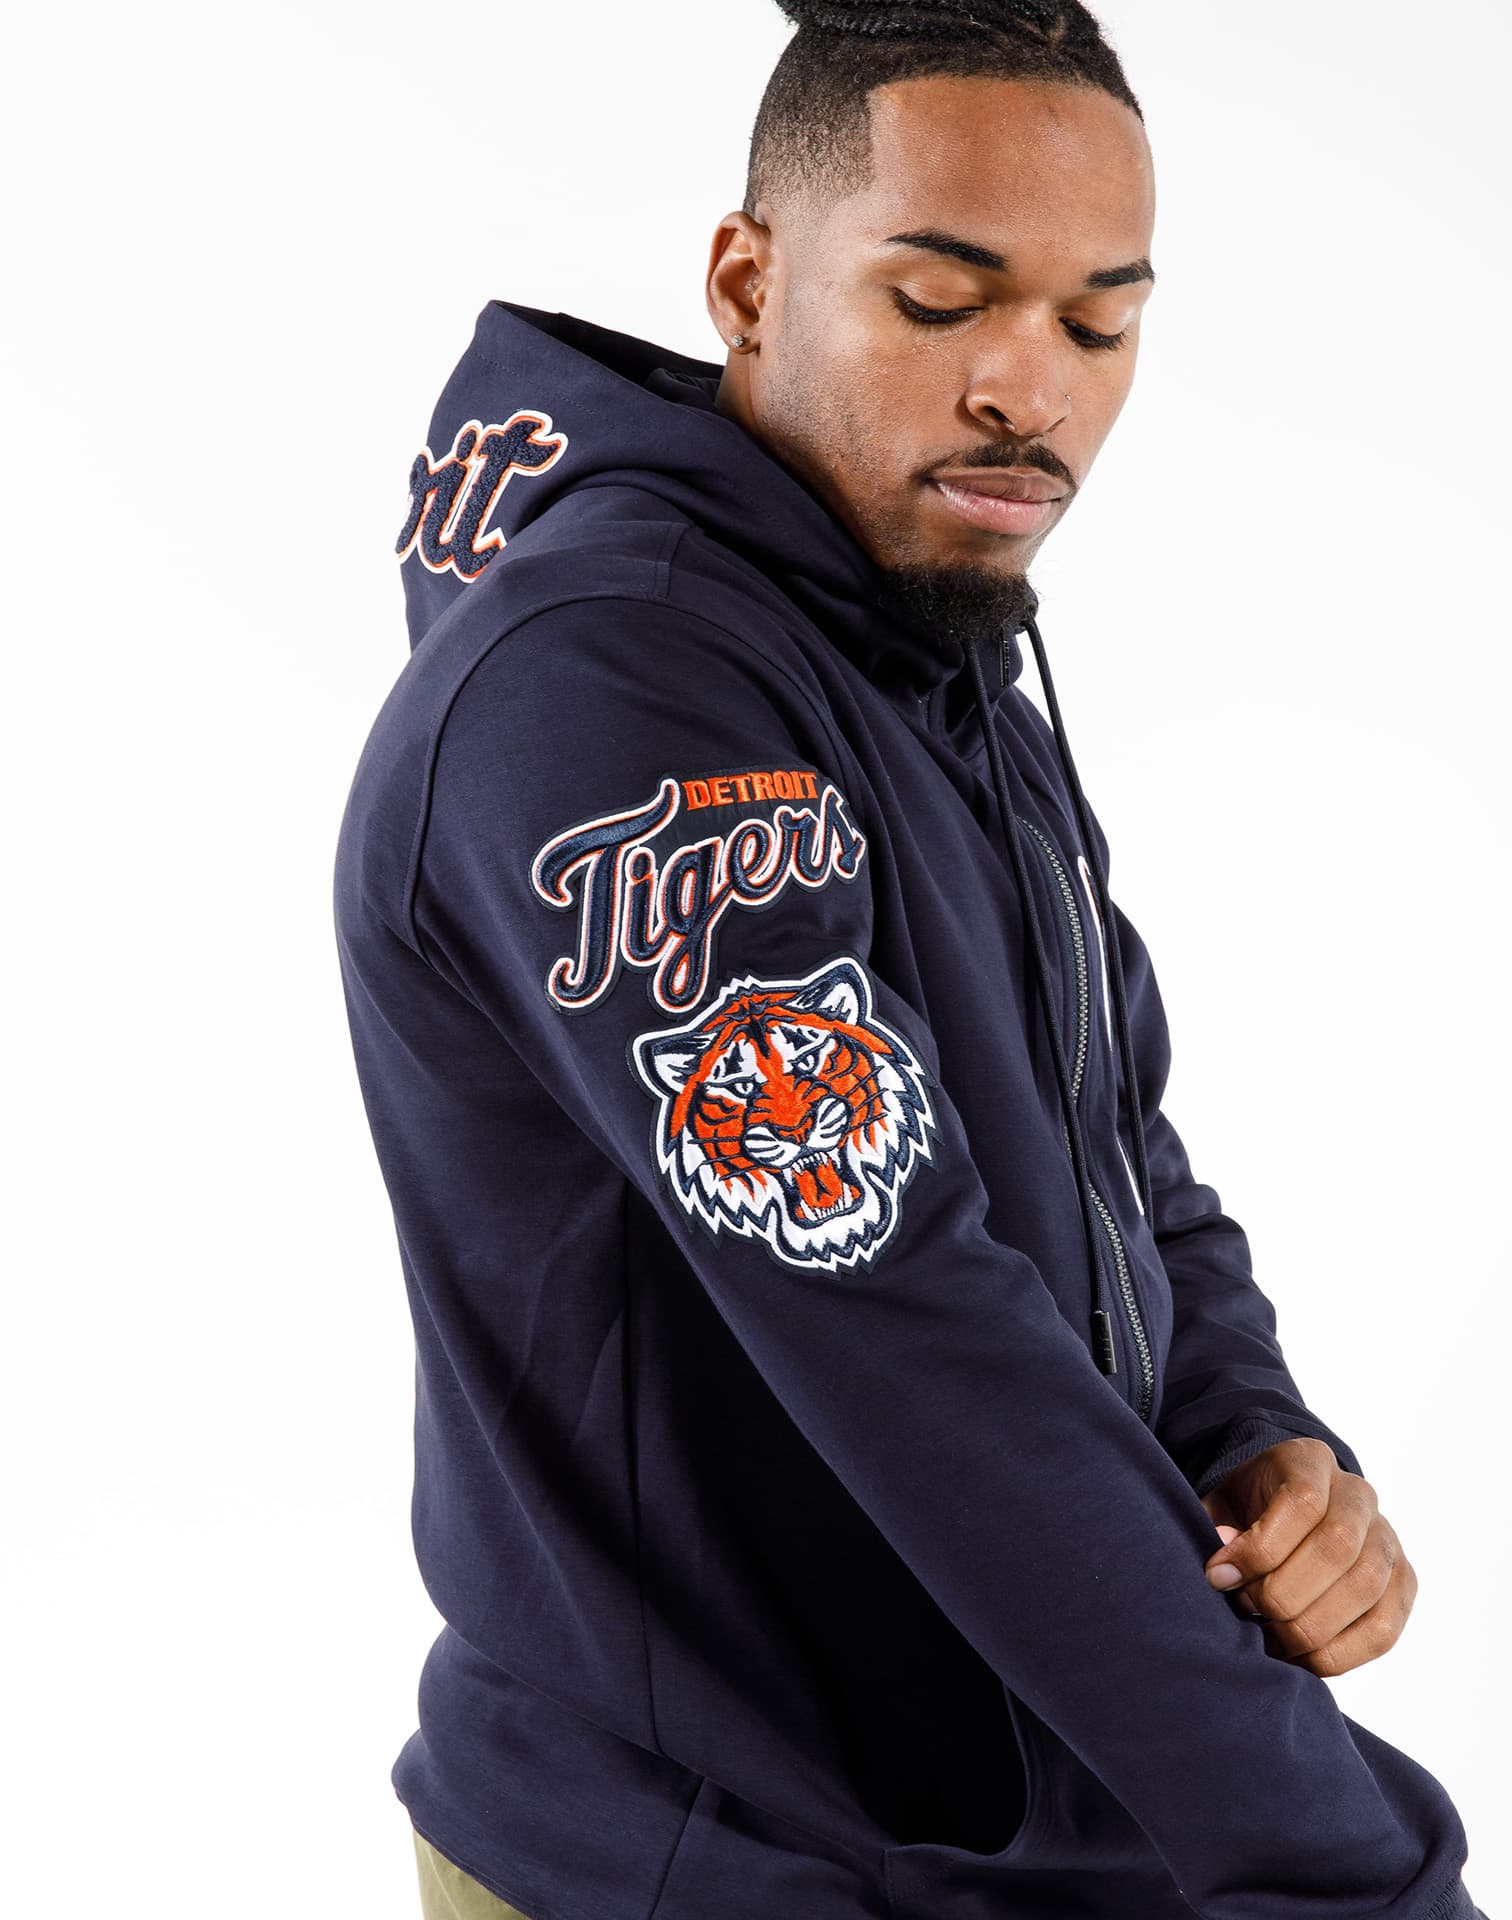 D R Detroit Rebels Detroit Tiger Athletic Department Apparel for Men Women Pullover Hoodie